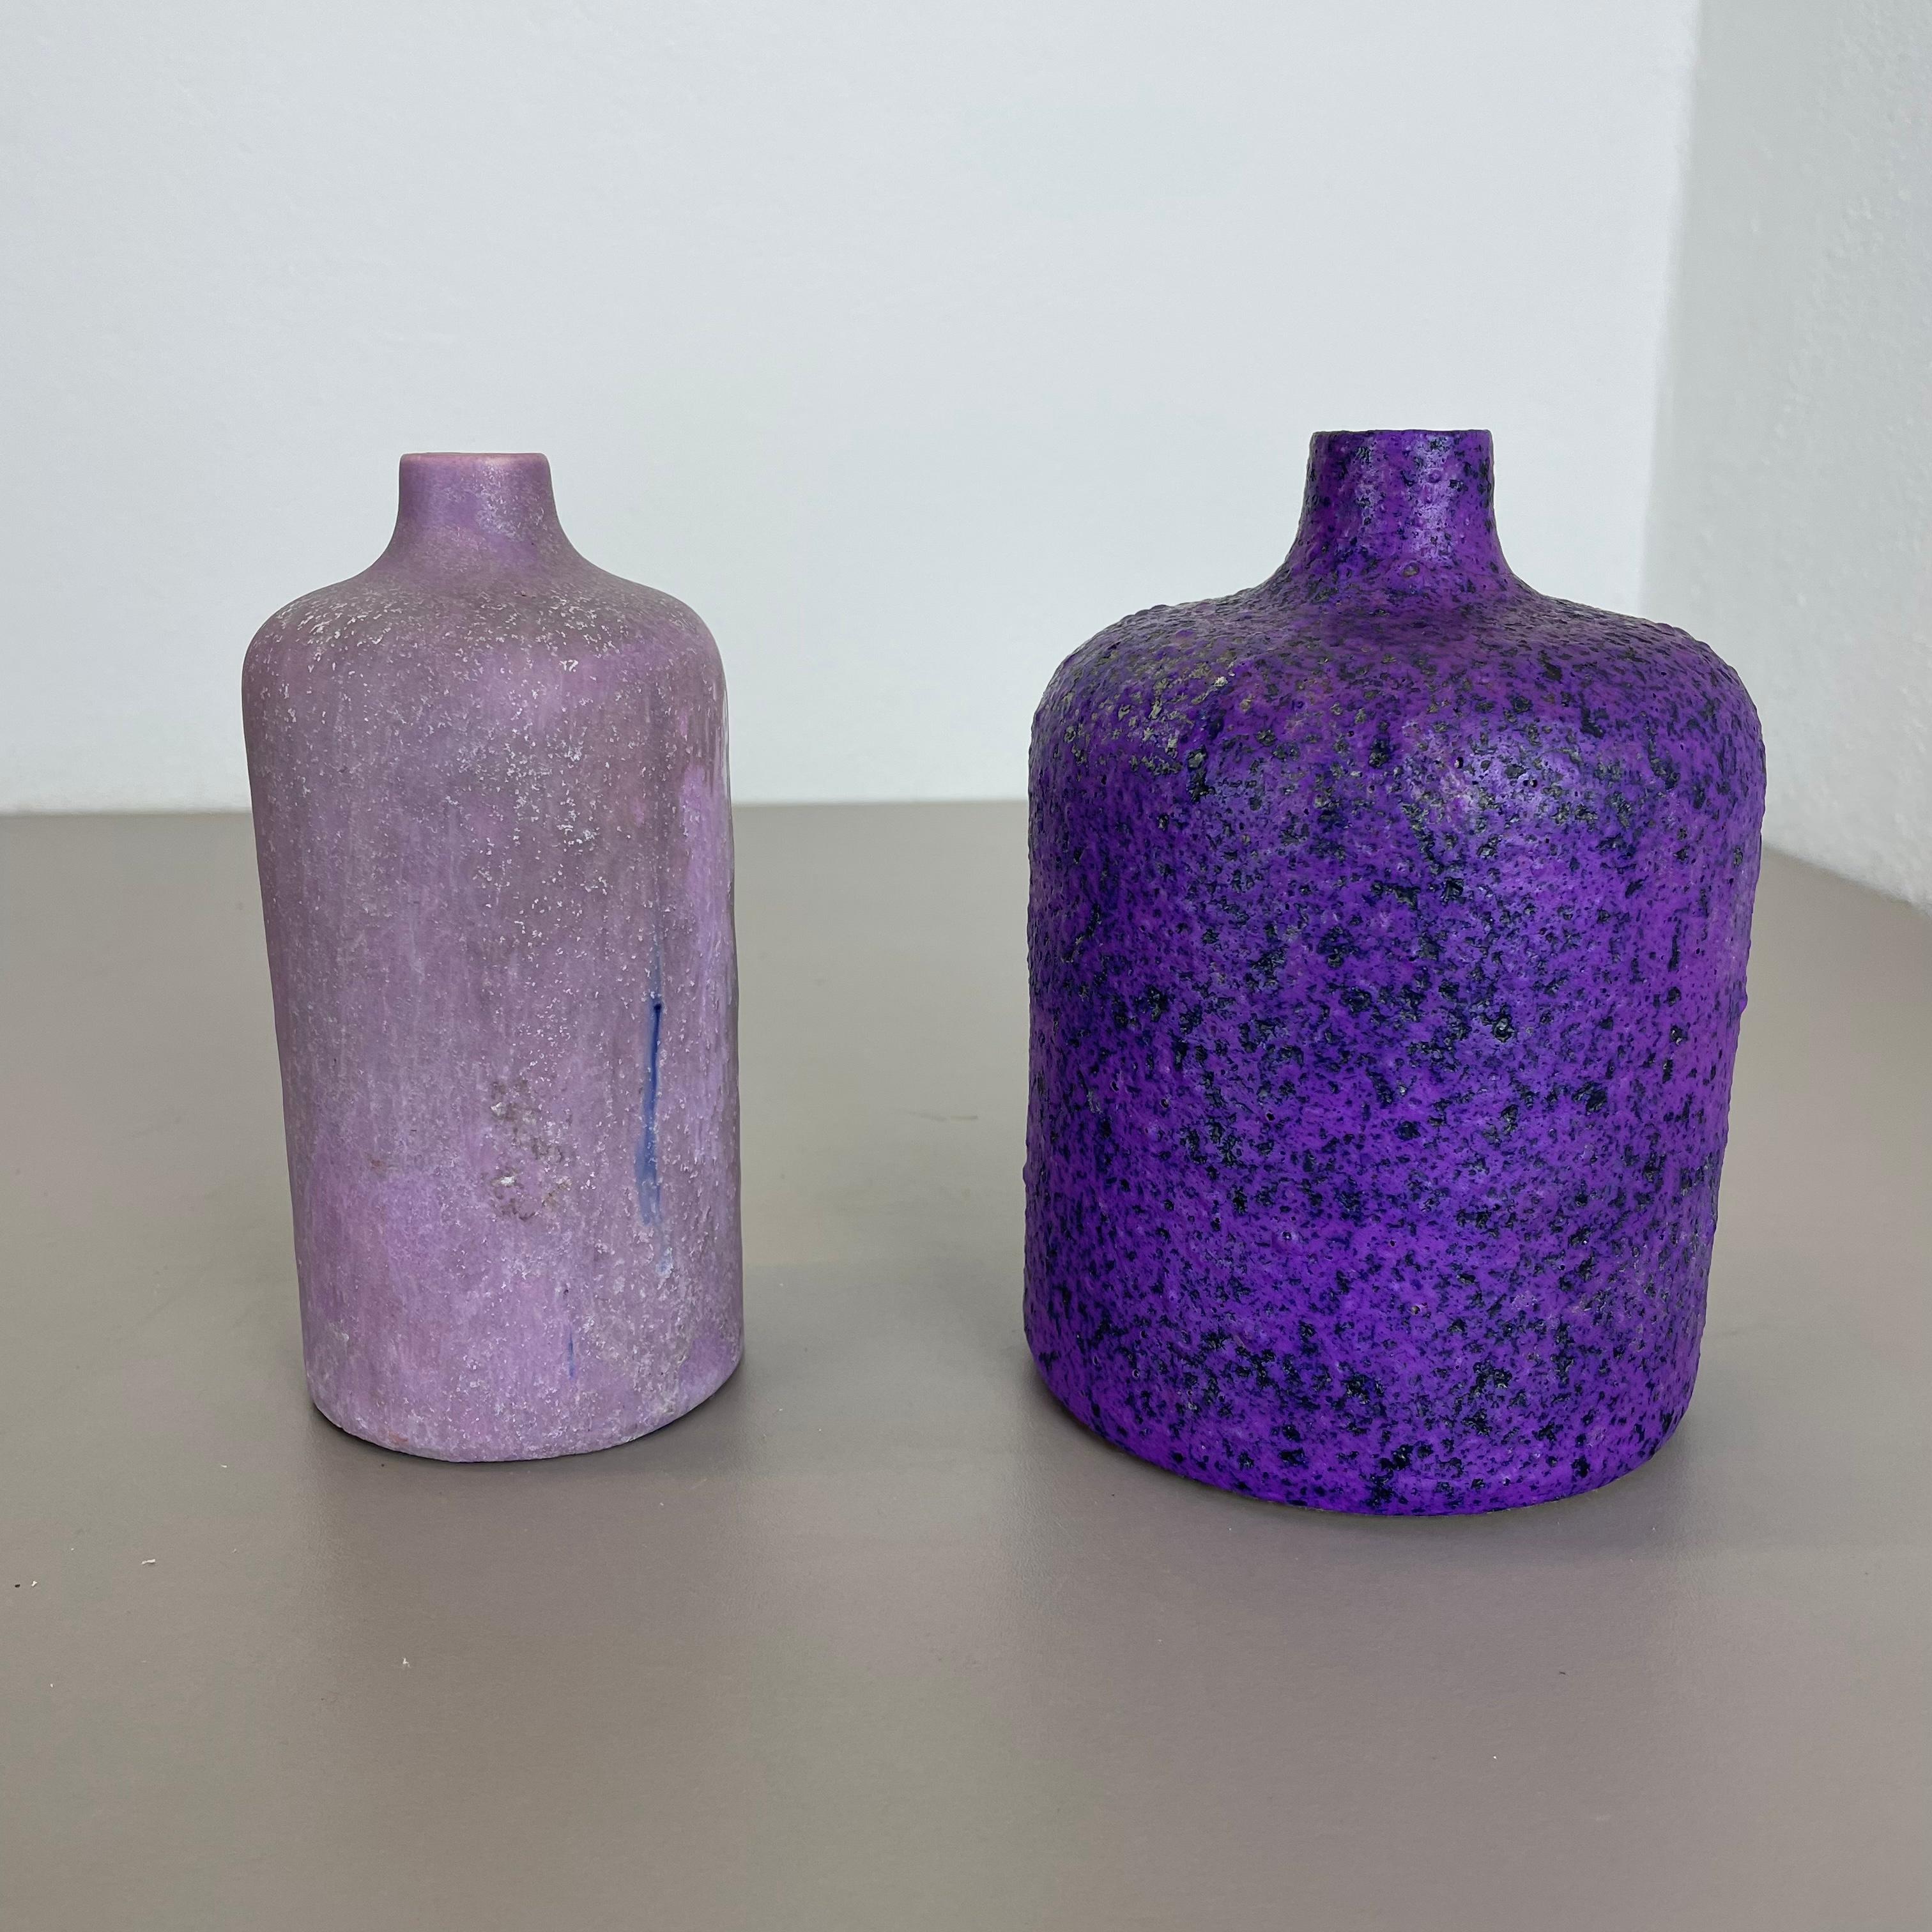 Satz von 2 lila-rosa Keramik Vase Objects Otto Keramik, Deutschland, 1970 (20. Jahrhundert) im Angebot